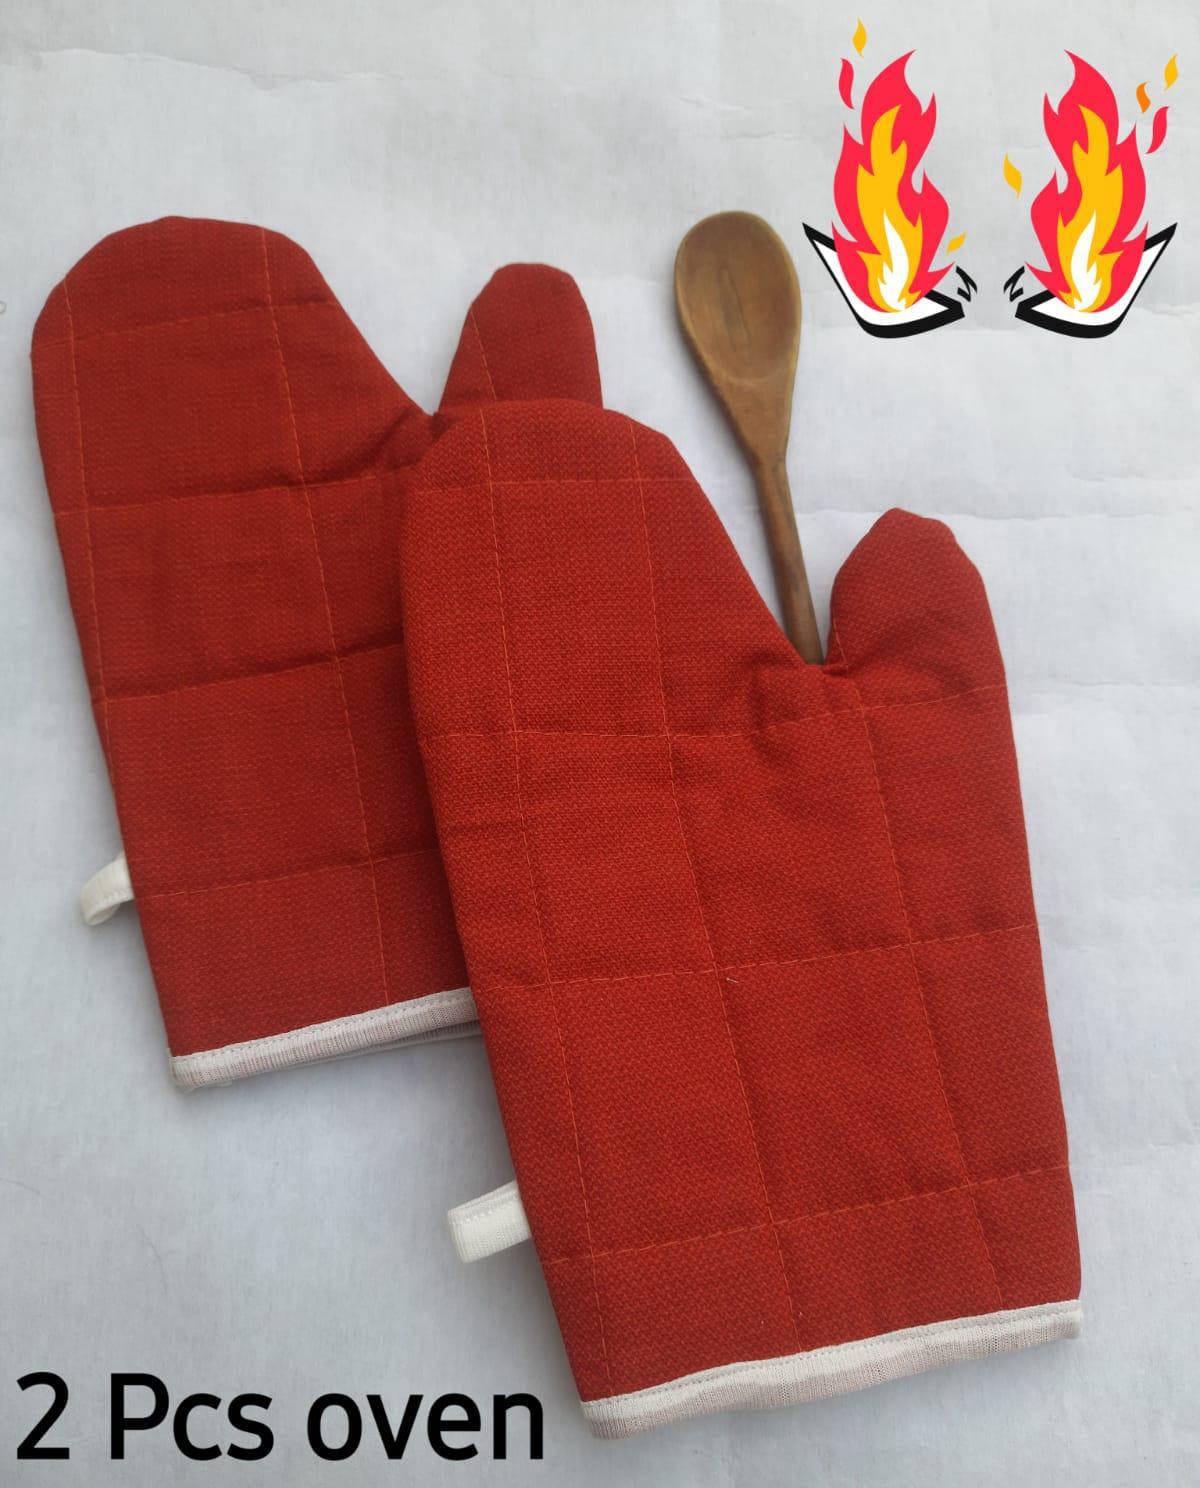   Oven Gloves in Pakistan 